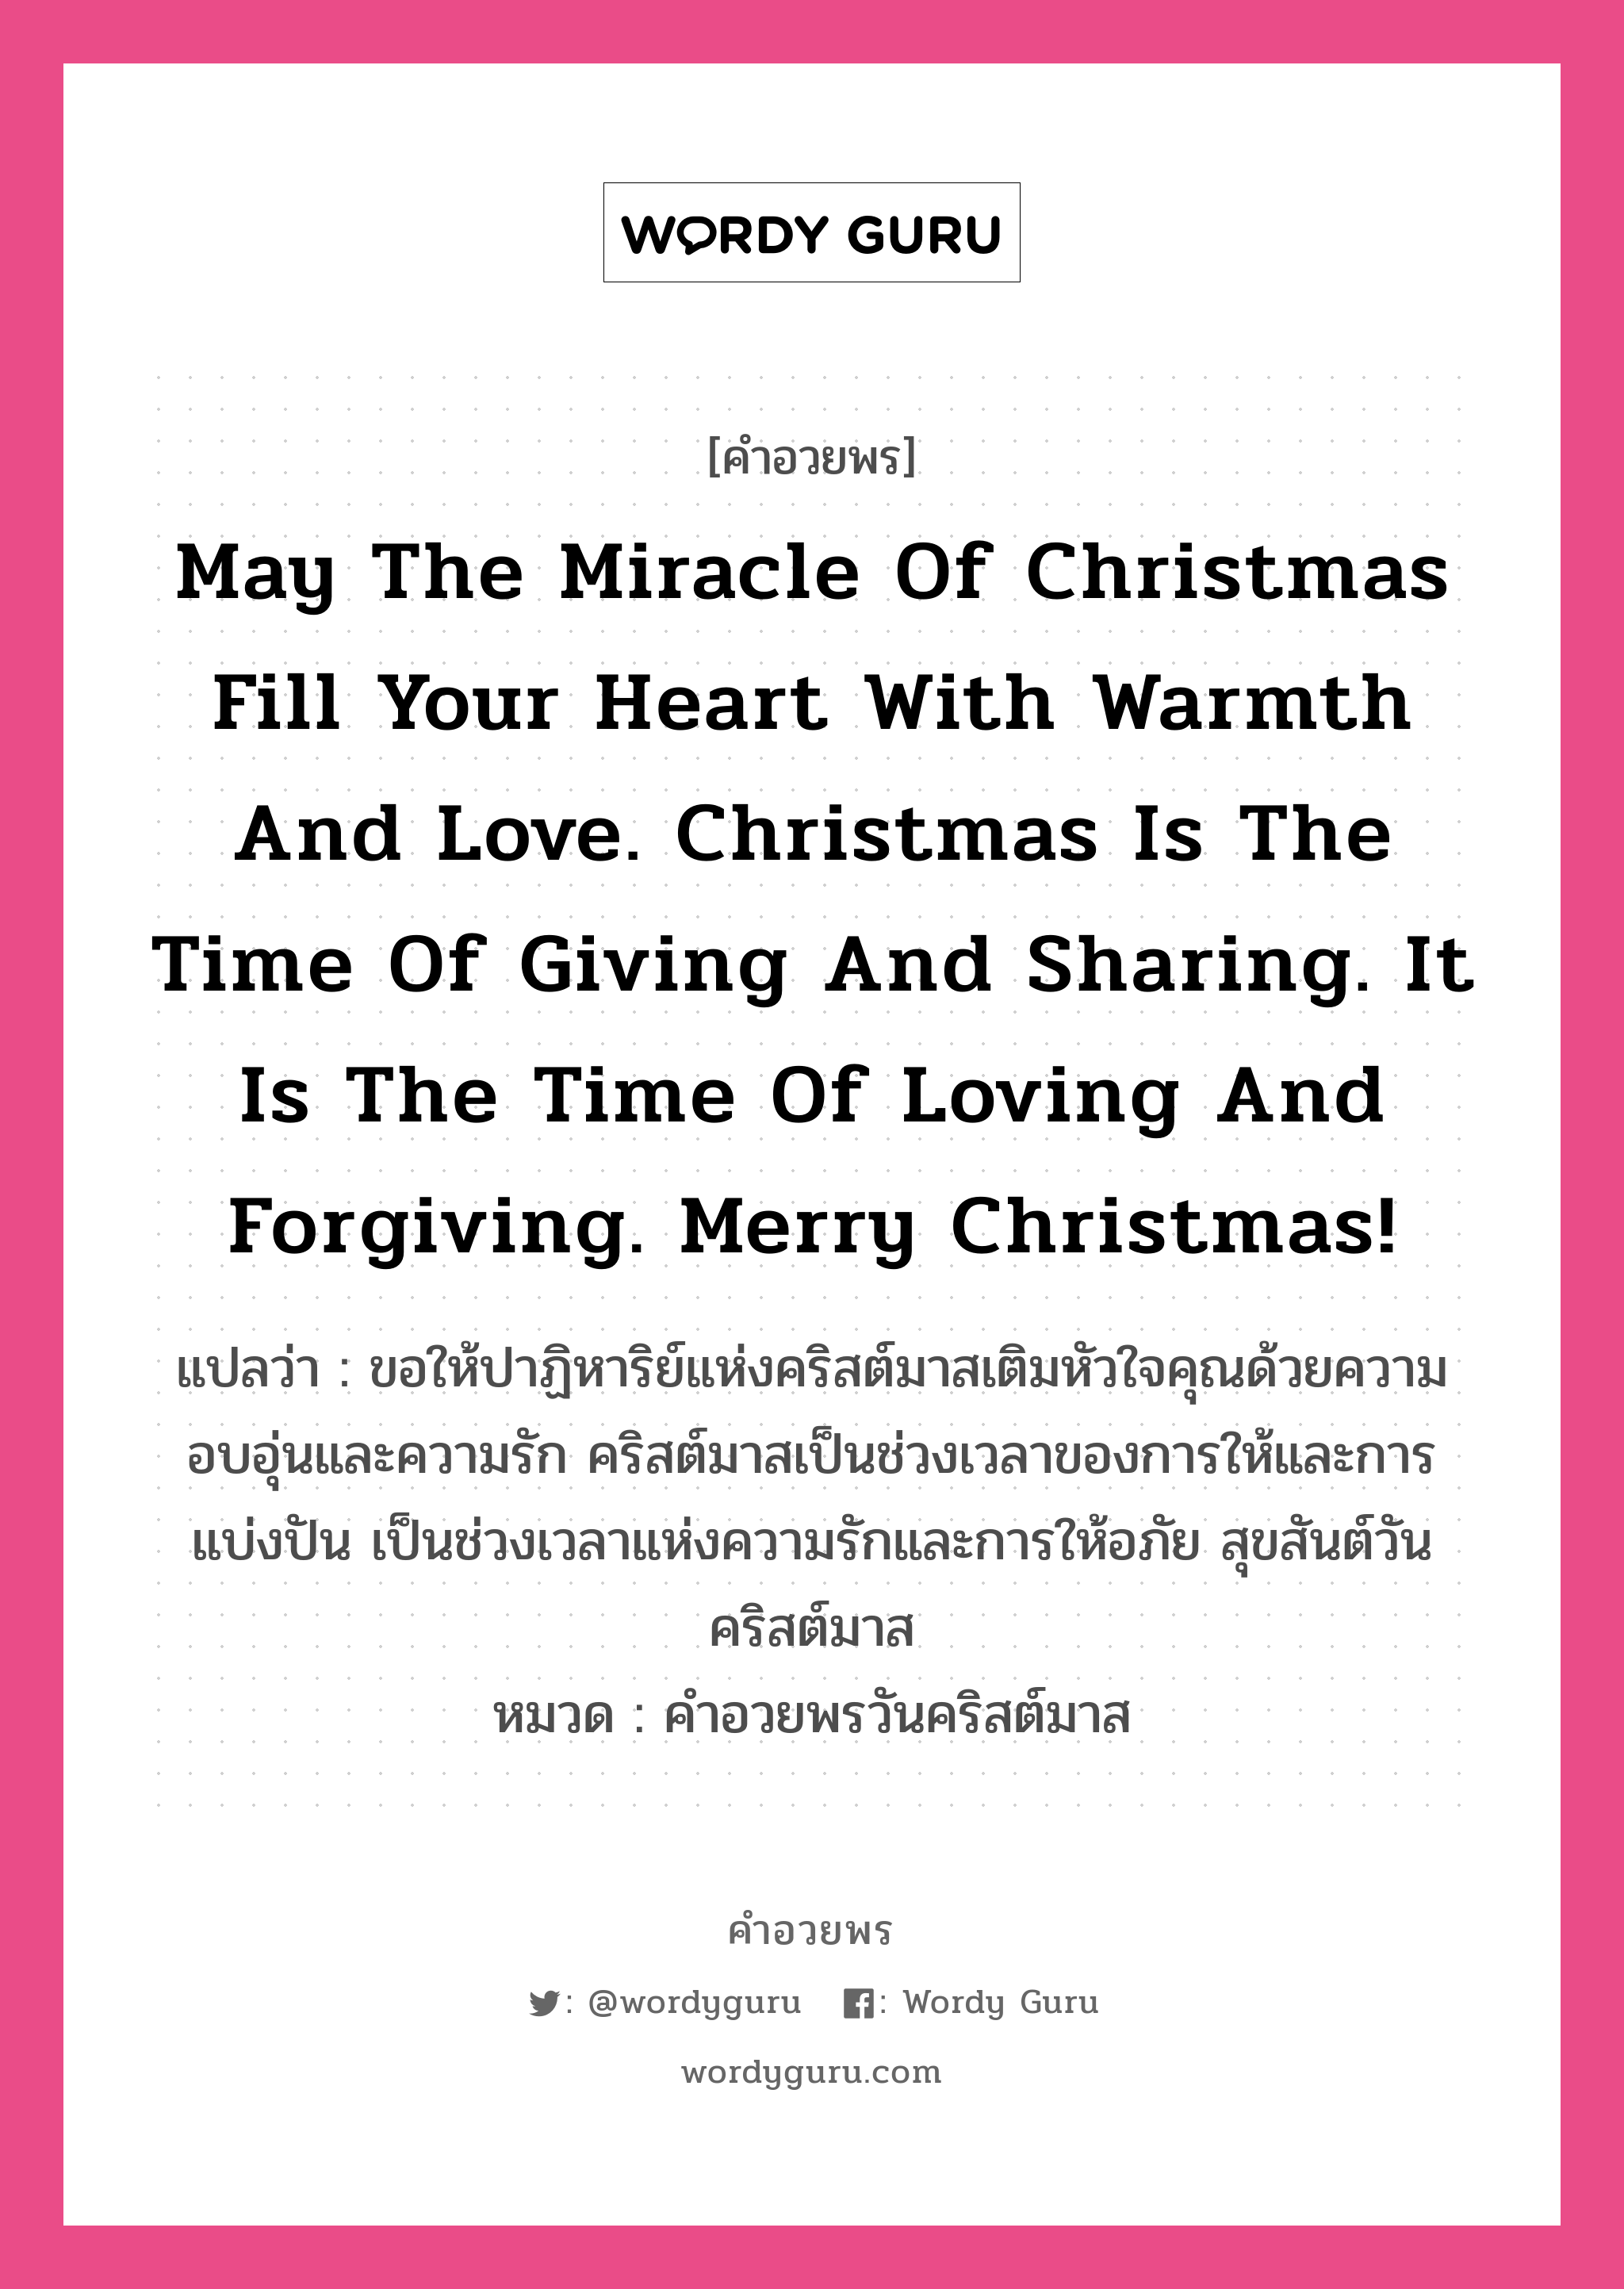 May the miracle of Christmas fill your heart with warmth and love. Christmas is the time of giving and sharing. It is the time of loving and forgiving. Merry Christmas! คำศัพท์ในกลุ่มประเภท คำอวยพรวันคริสต์มาส, แปลว่า ขอให้ปาฏิหาริย์แห่งคริสต์มาสเติมหัวใจคุณด้วยความอบอุ่นและความรัก คริสต์มาสเป็นช่วงเวลาของการให้และการแบ่งปัน เป็นช่วงเวลาแห่งความรักและการให้อภัย สุขสันต์วันคริสต์มาส หมวด คำอวยพรวันคริสต์มาส หมวด คำอวยพรวันคริสต์มาส